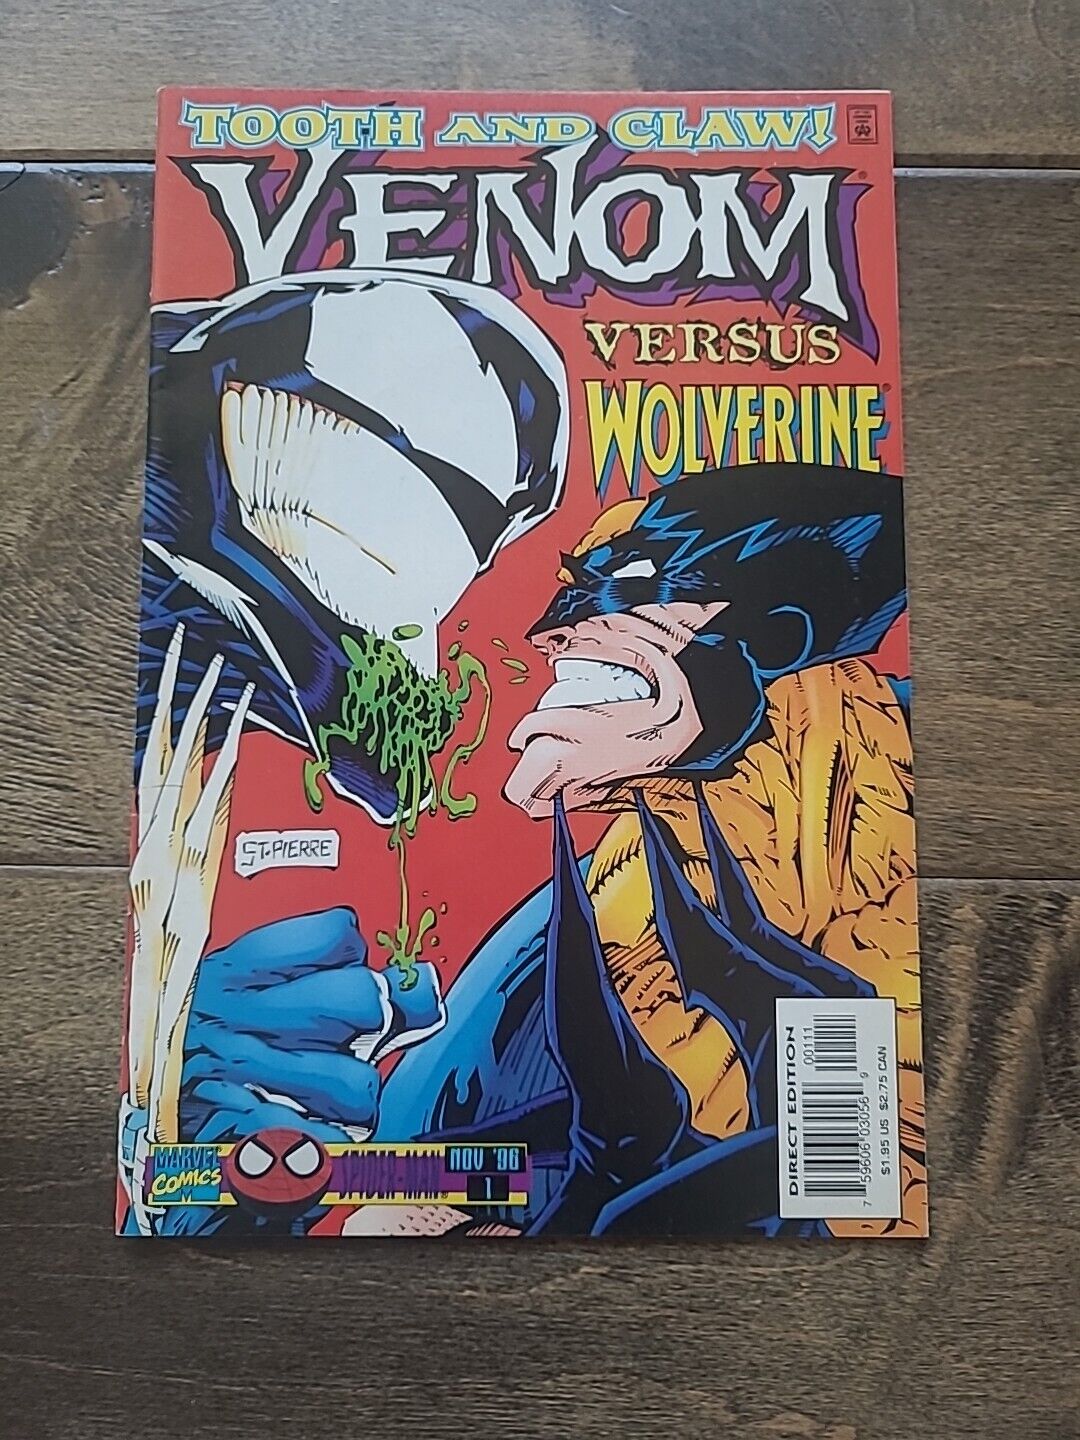 VENOM Tooth & Claw vs Wolverine #1